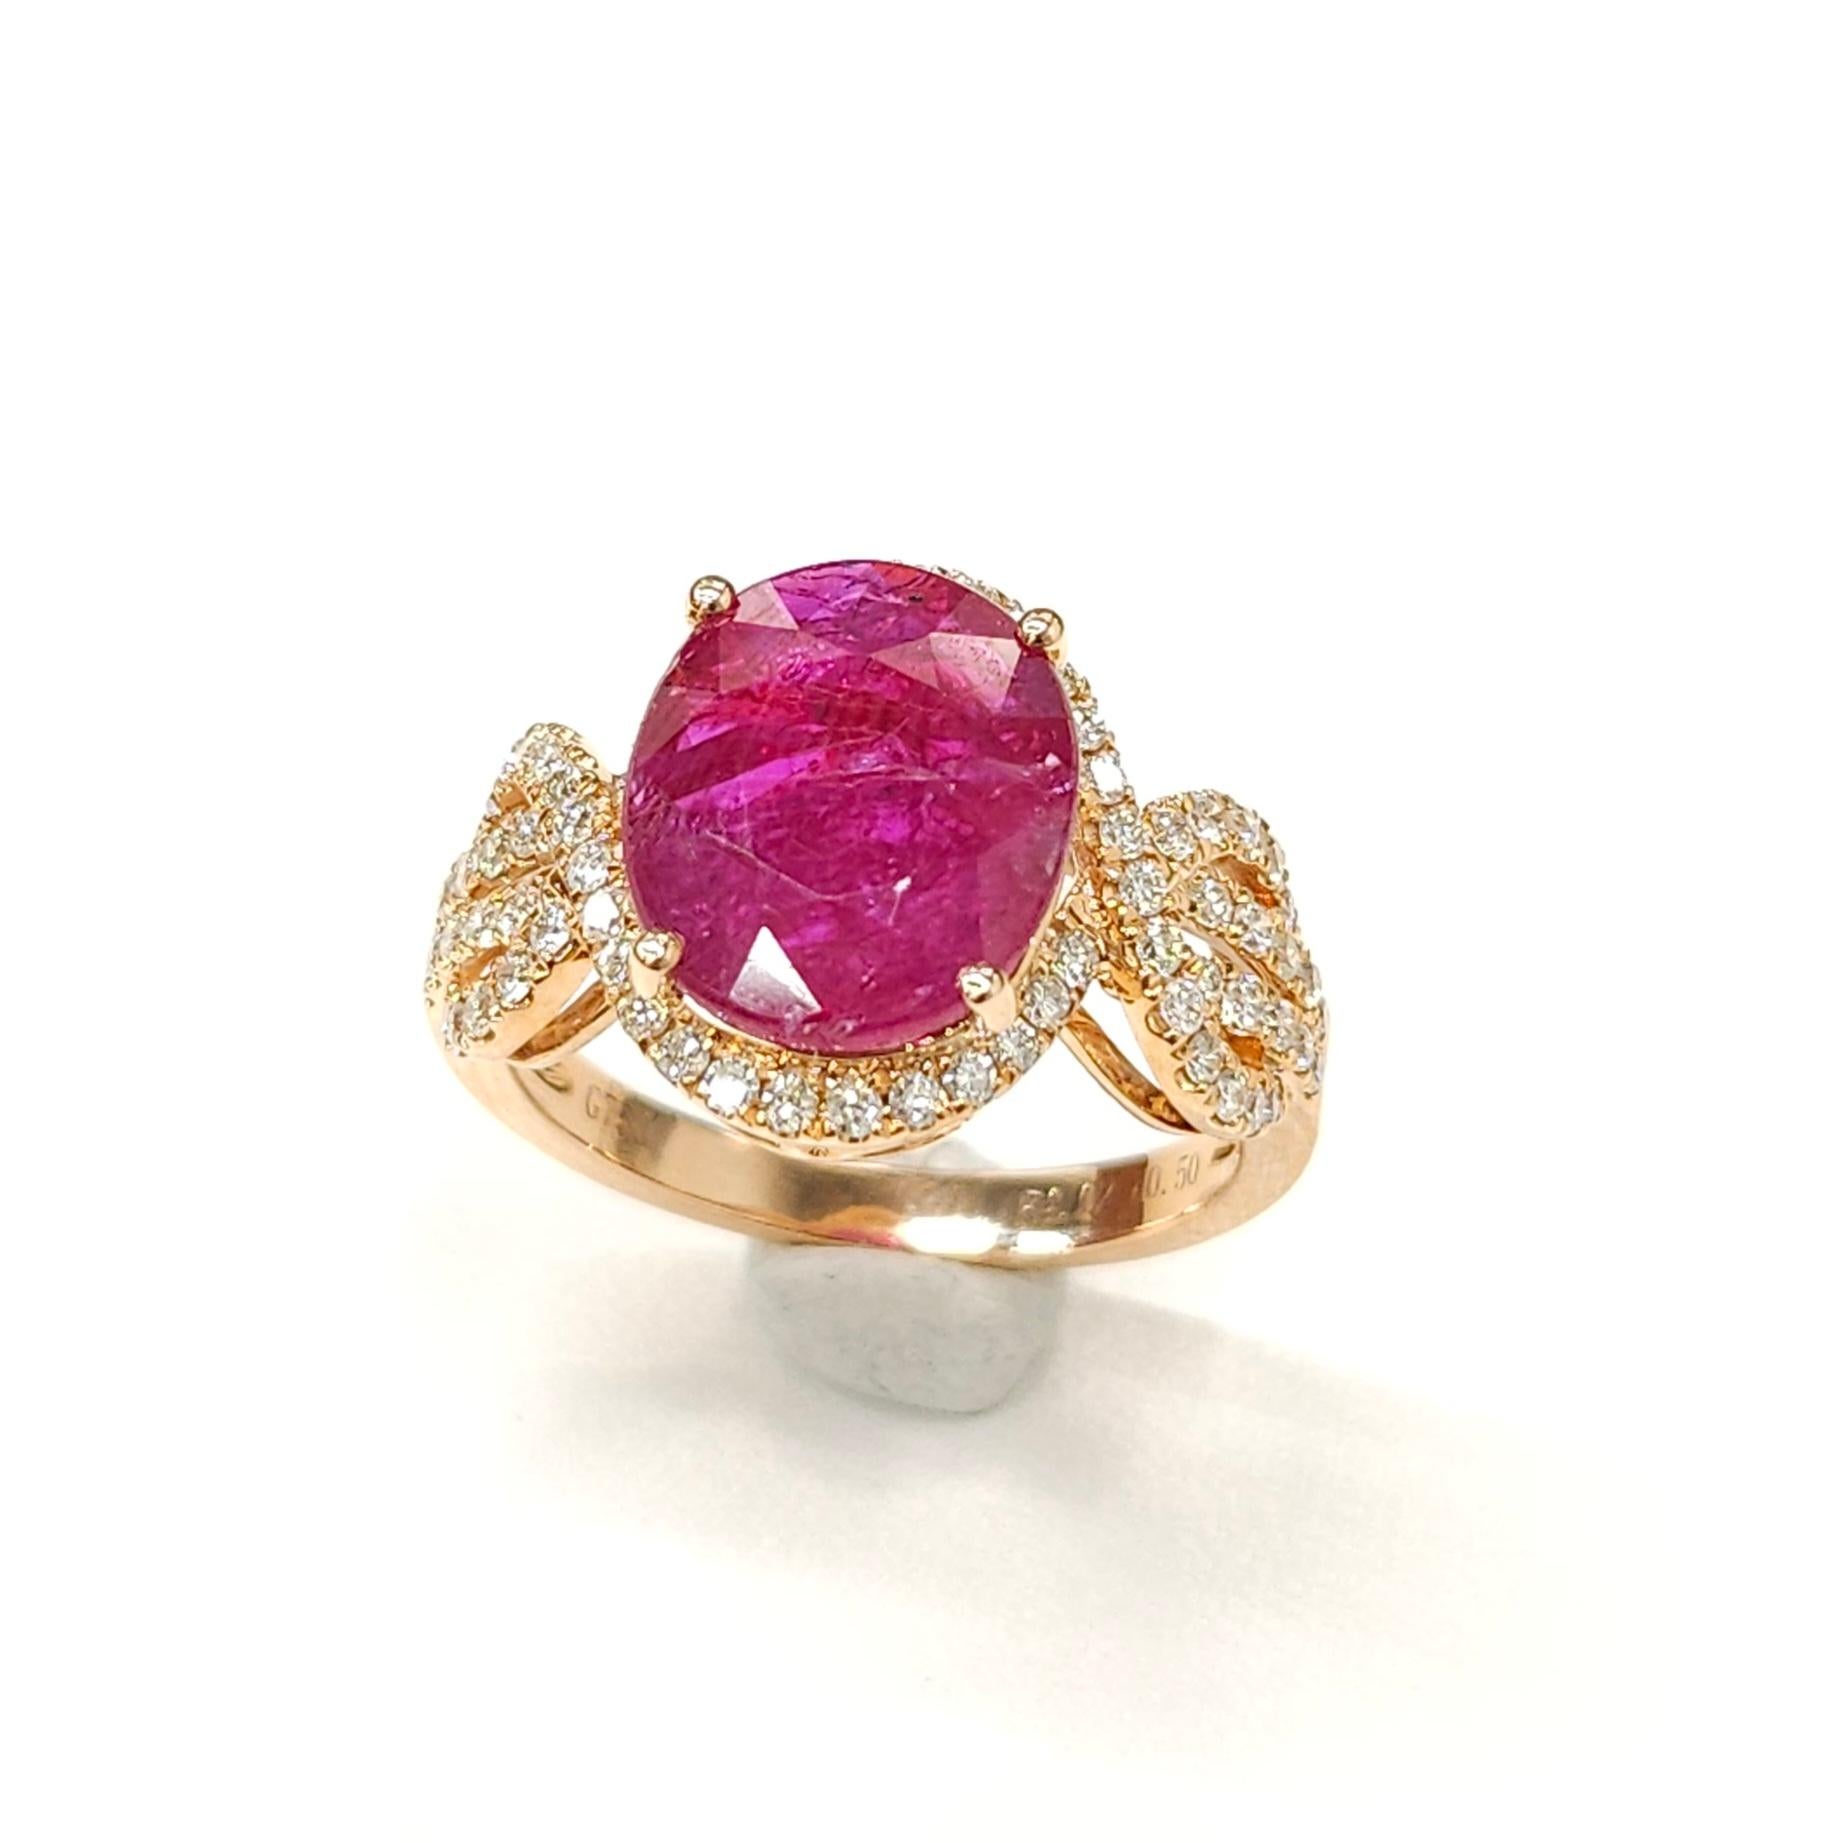 IGI Certified 4.02 Carat Ruby & Diamond Ring in 18K Rose Gold For Sale 3